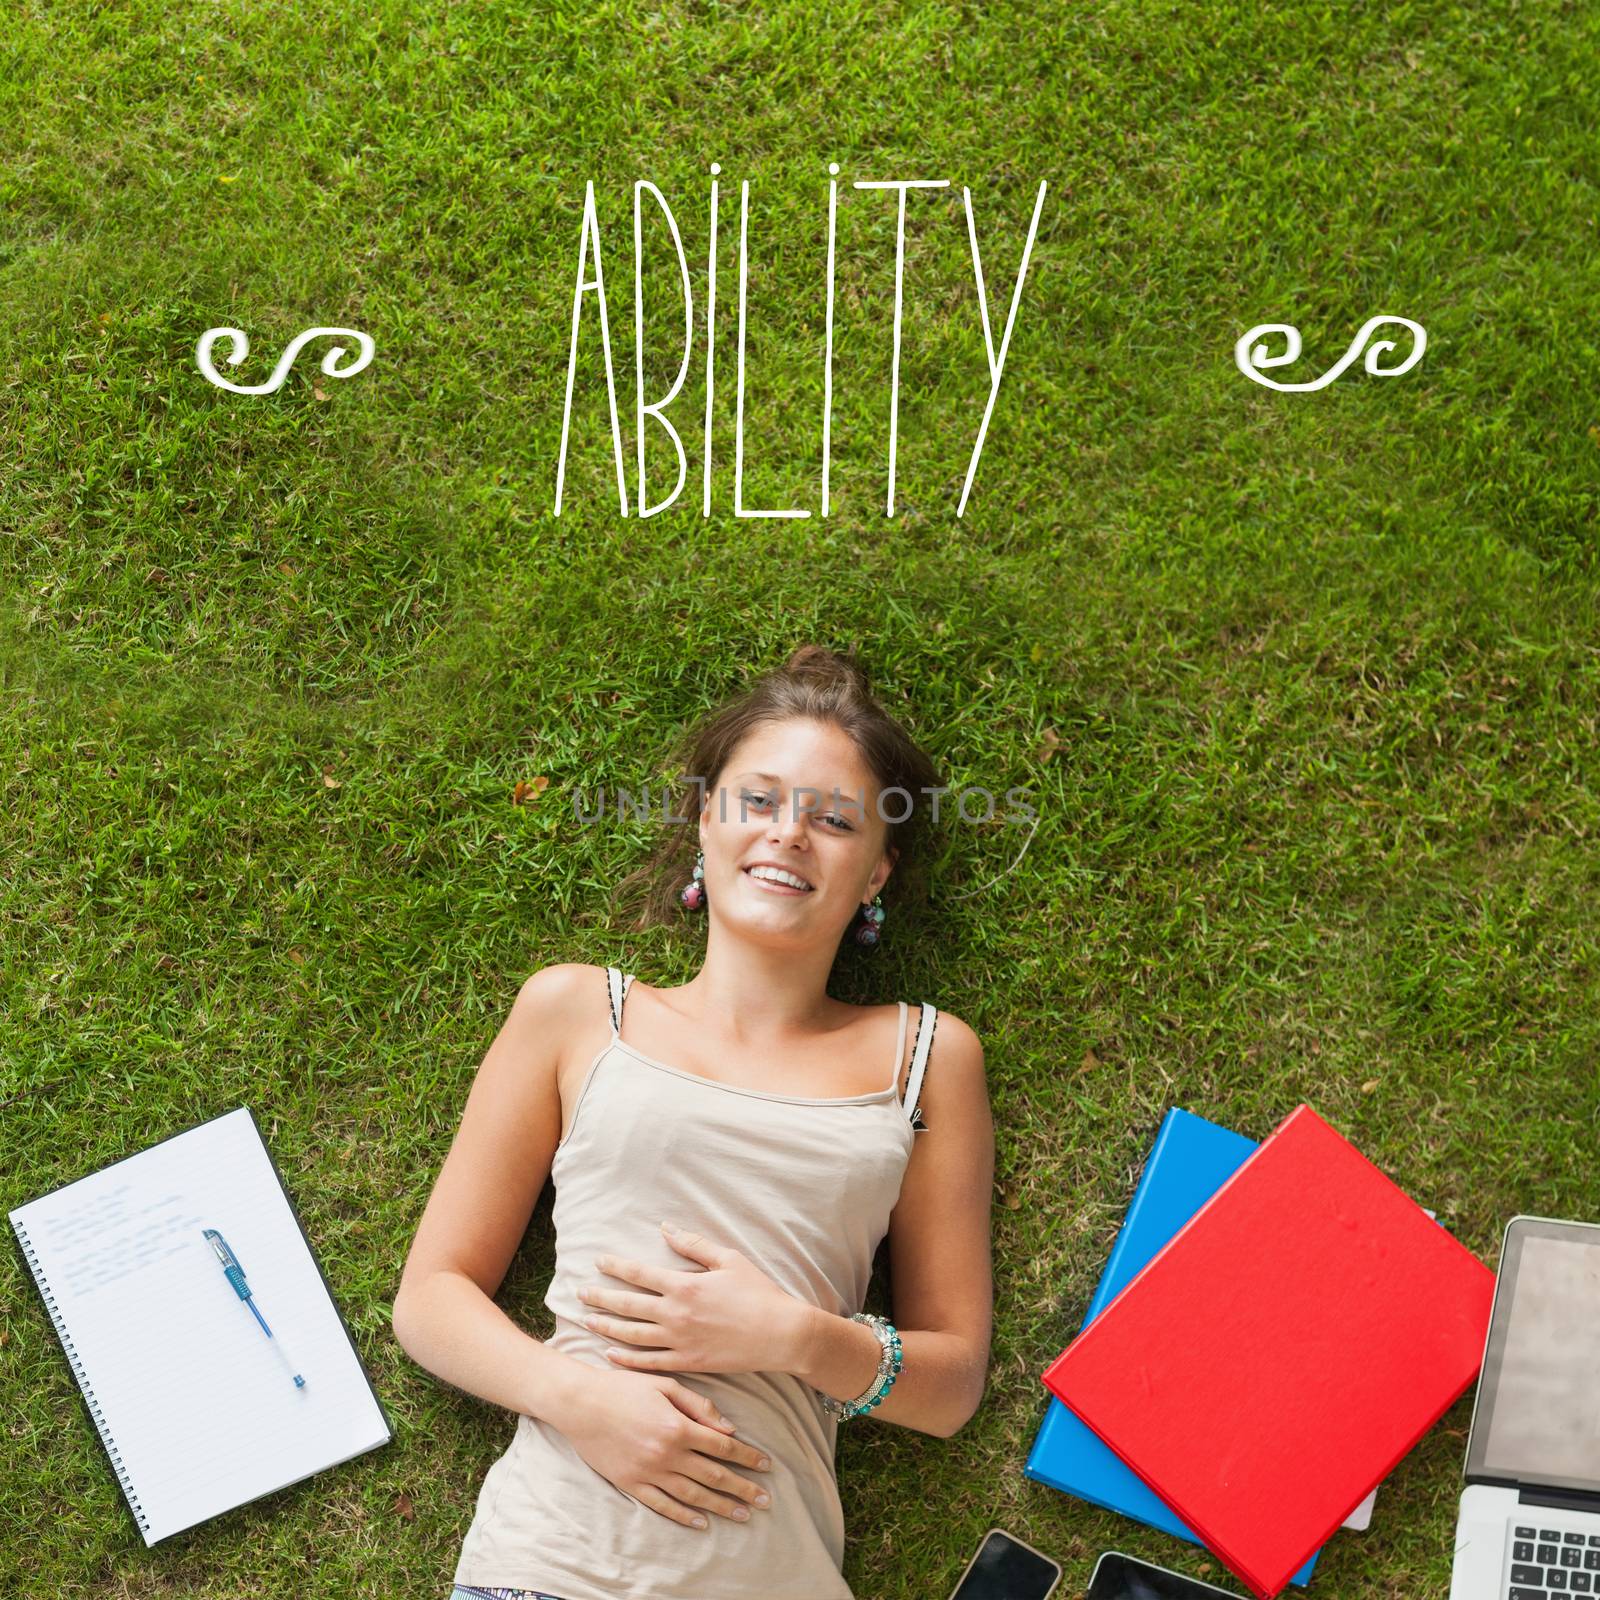 Ability against pretty student lying on grass by Wavebreakmedia